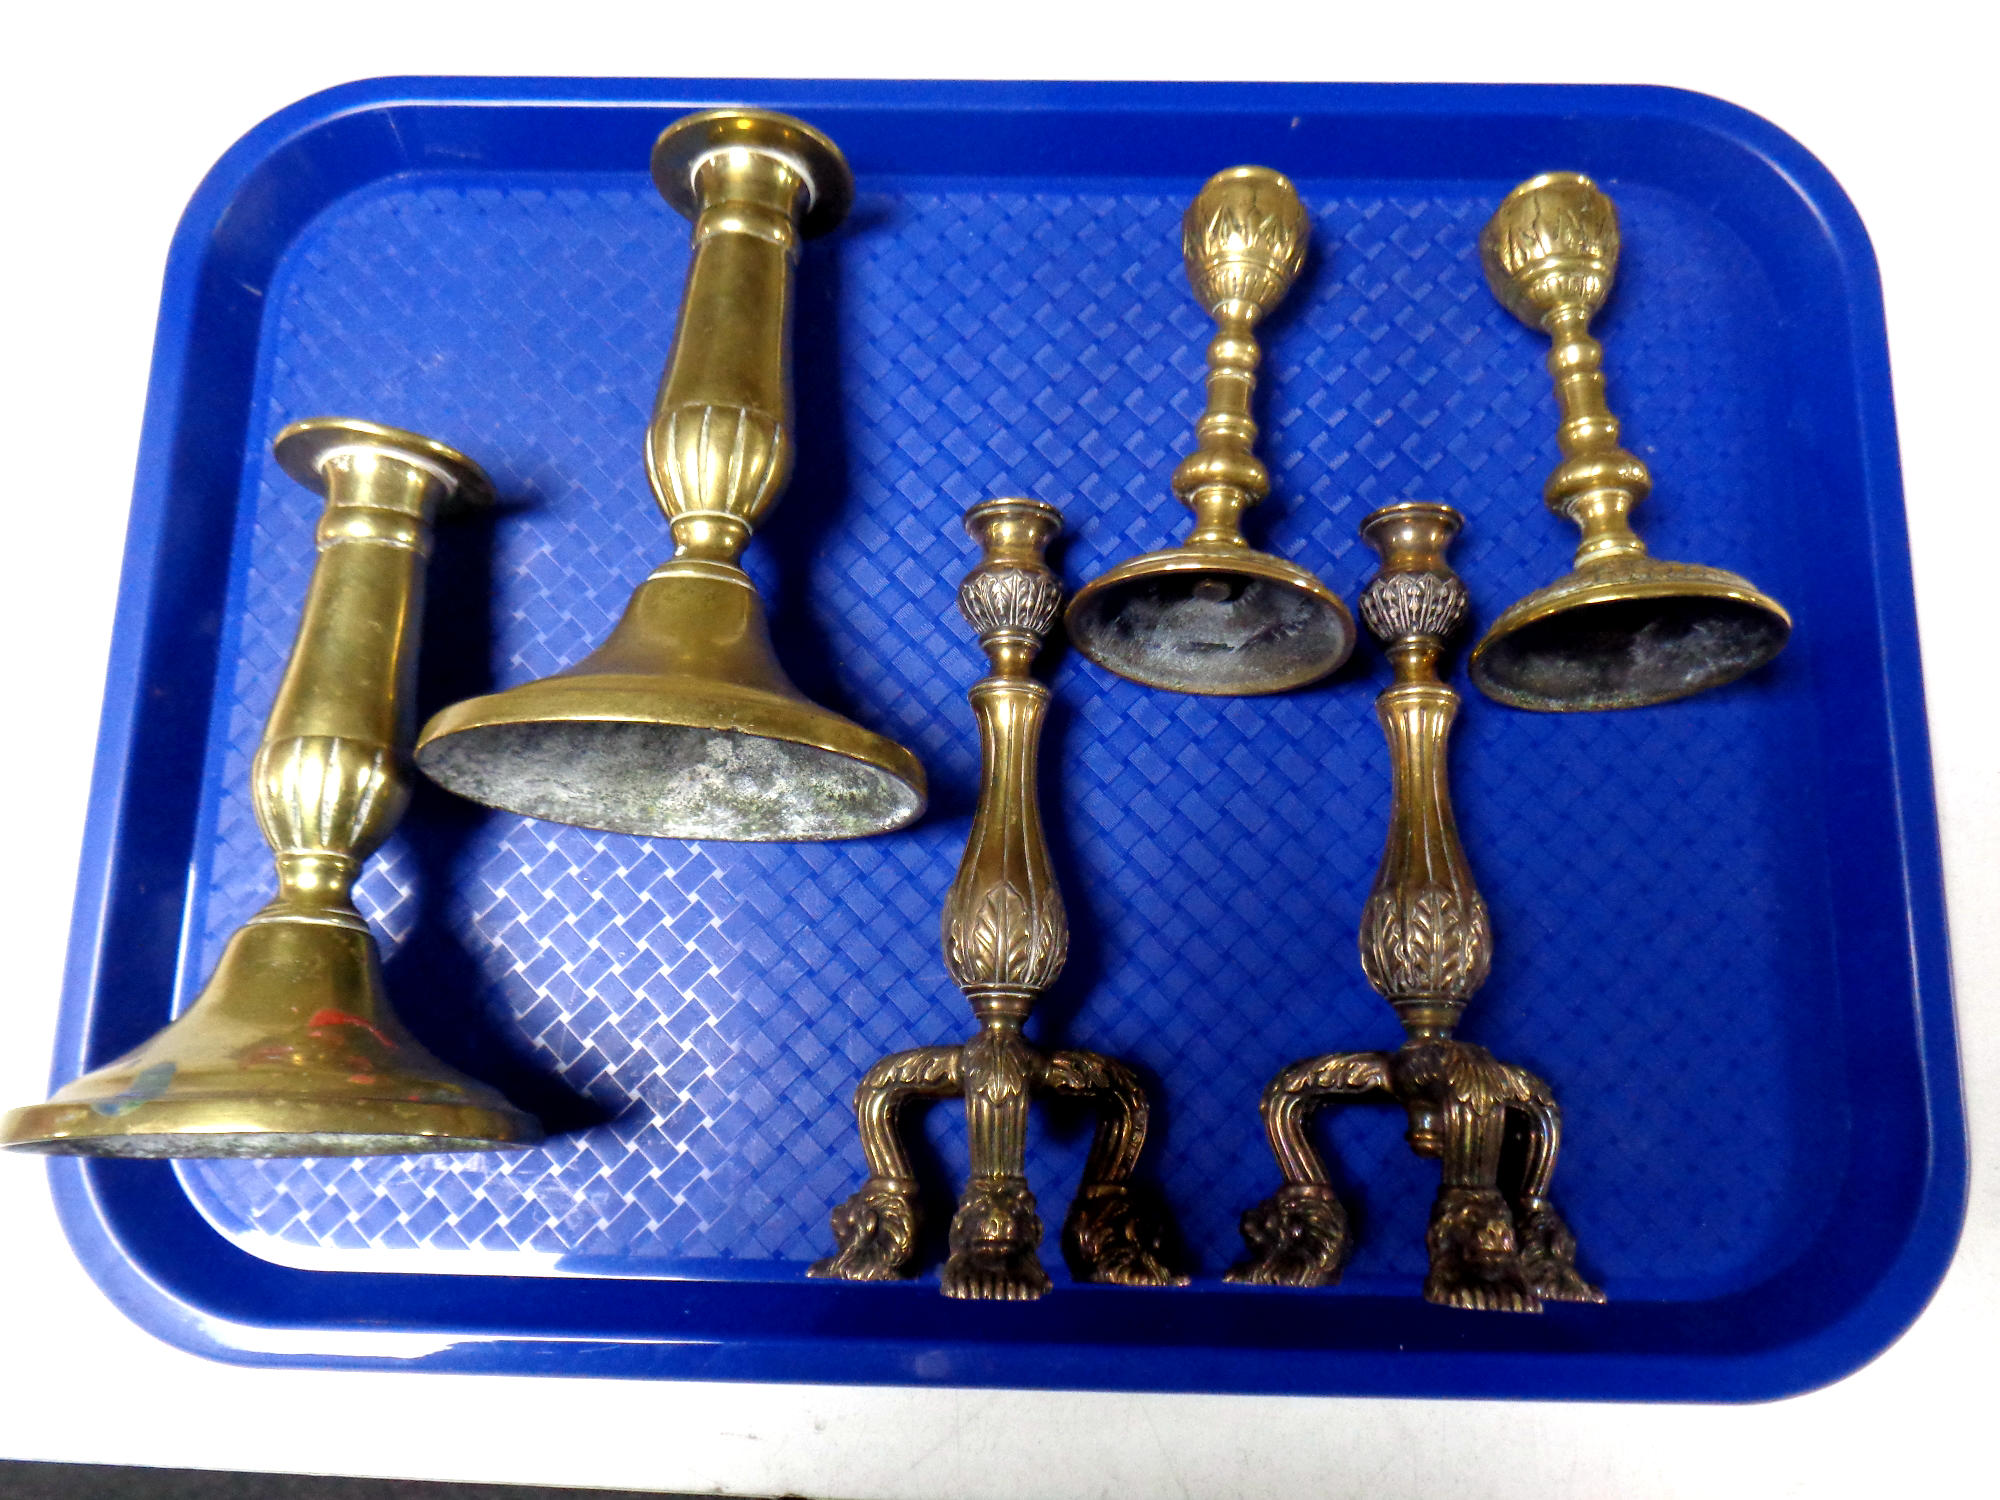 Three pairs of antique brass candlesticks